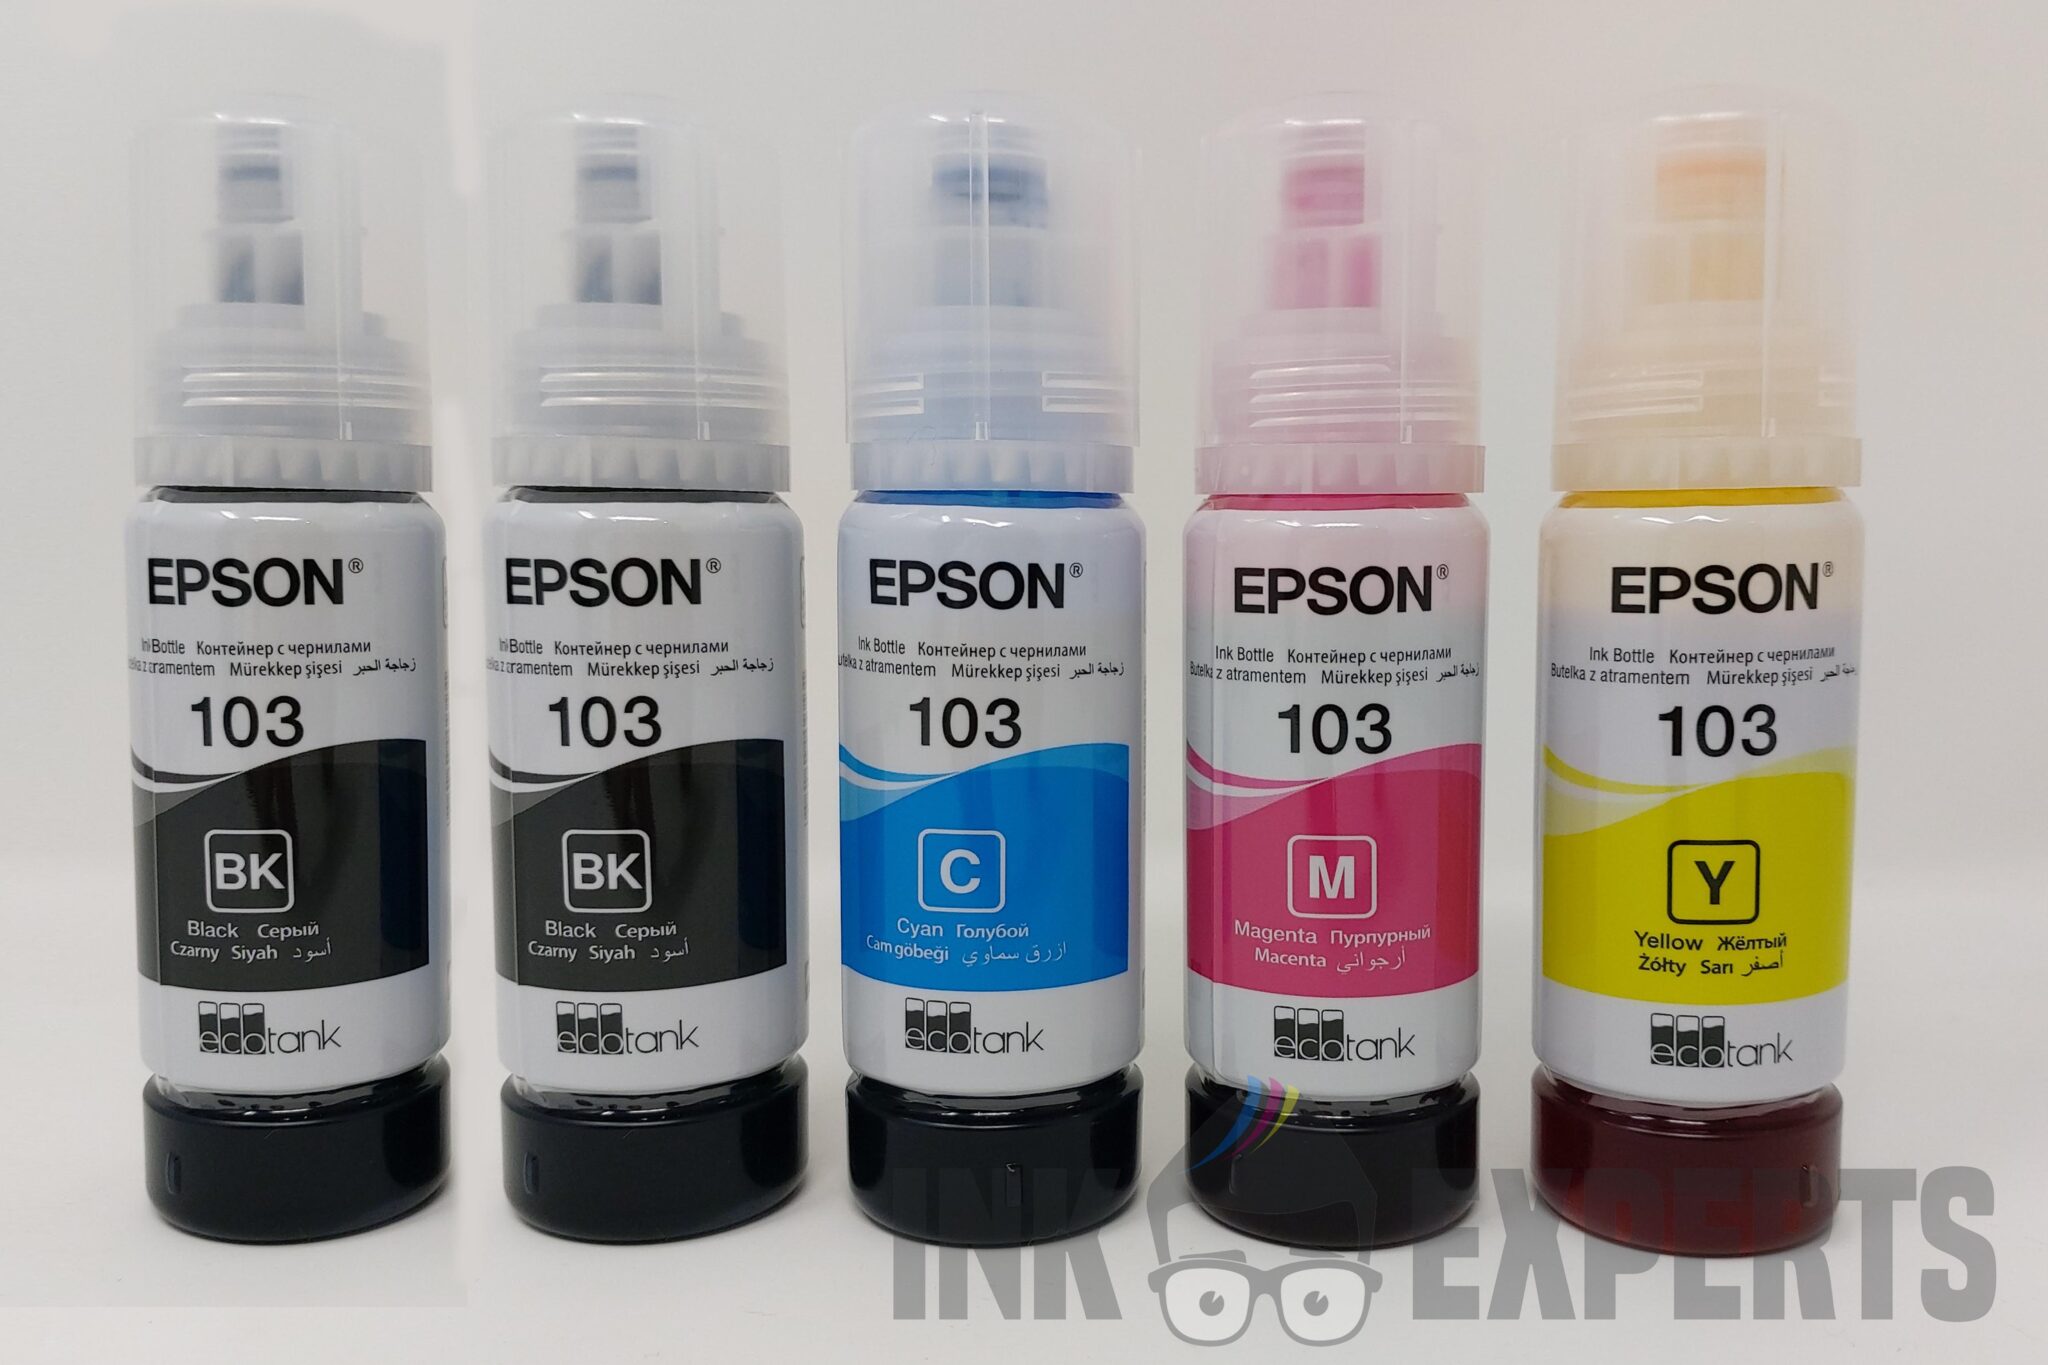 Epson 104 Ink Bottle Set For Ecotank Printers Genuine Epson Original Ink Ink Experts 7449